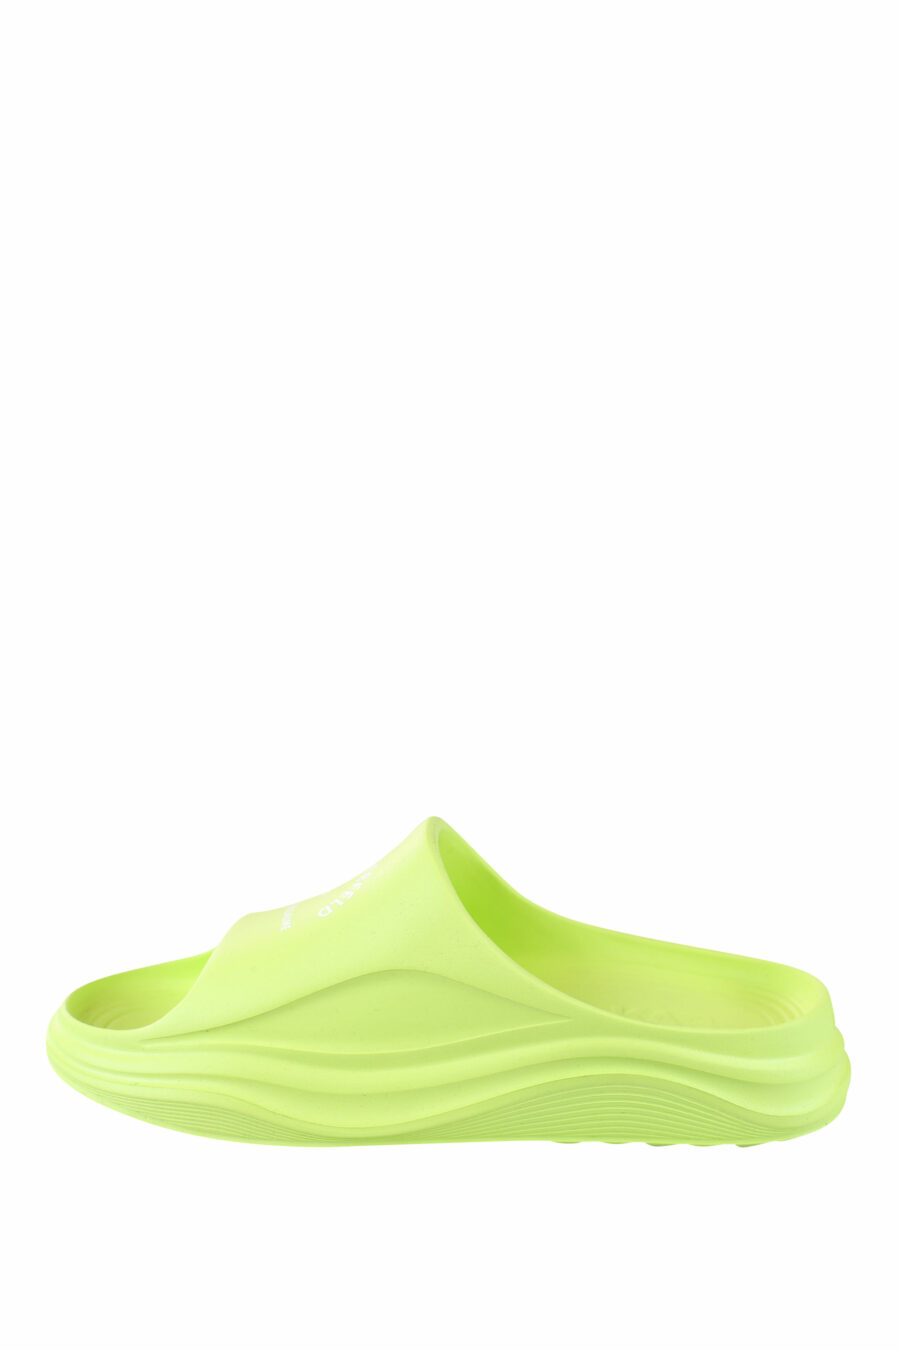 Green eco flip flops with monochrome logo - IMG 0049